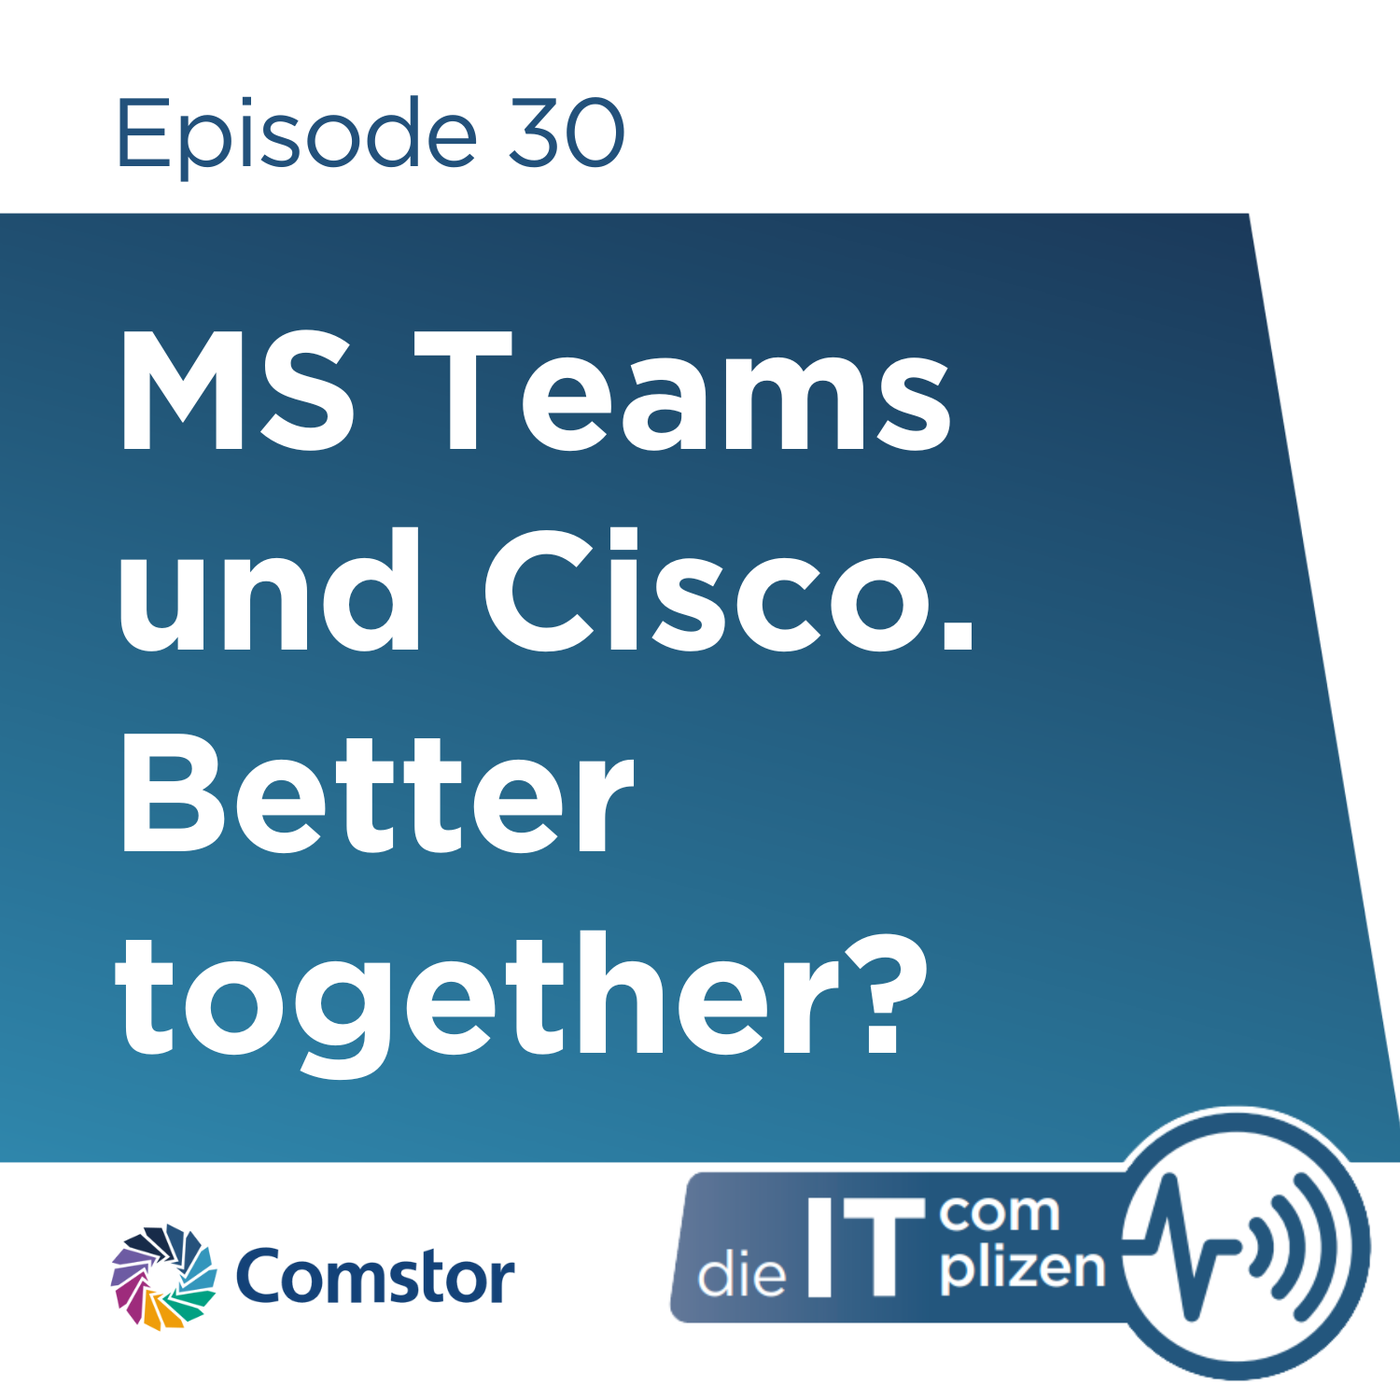 Microsoft Teams und Cisco. Better together?